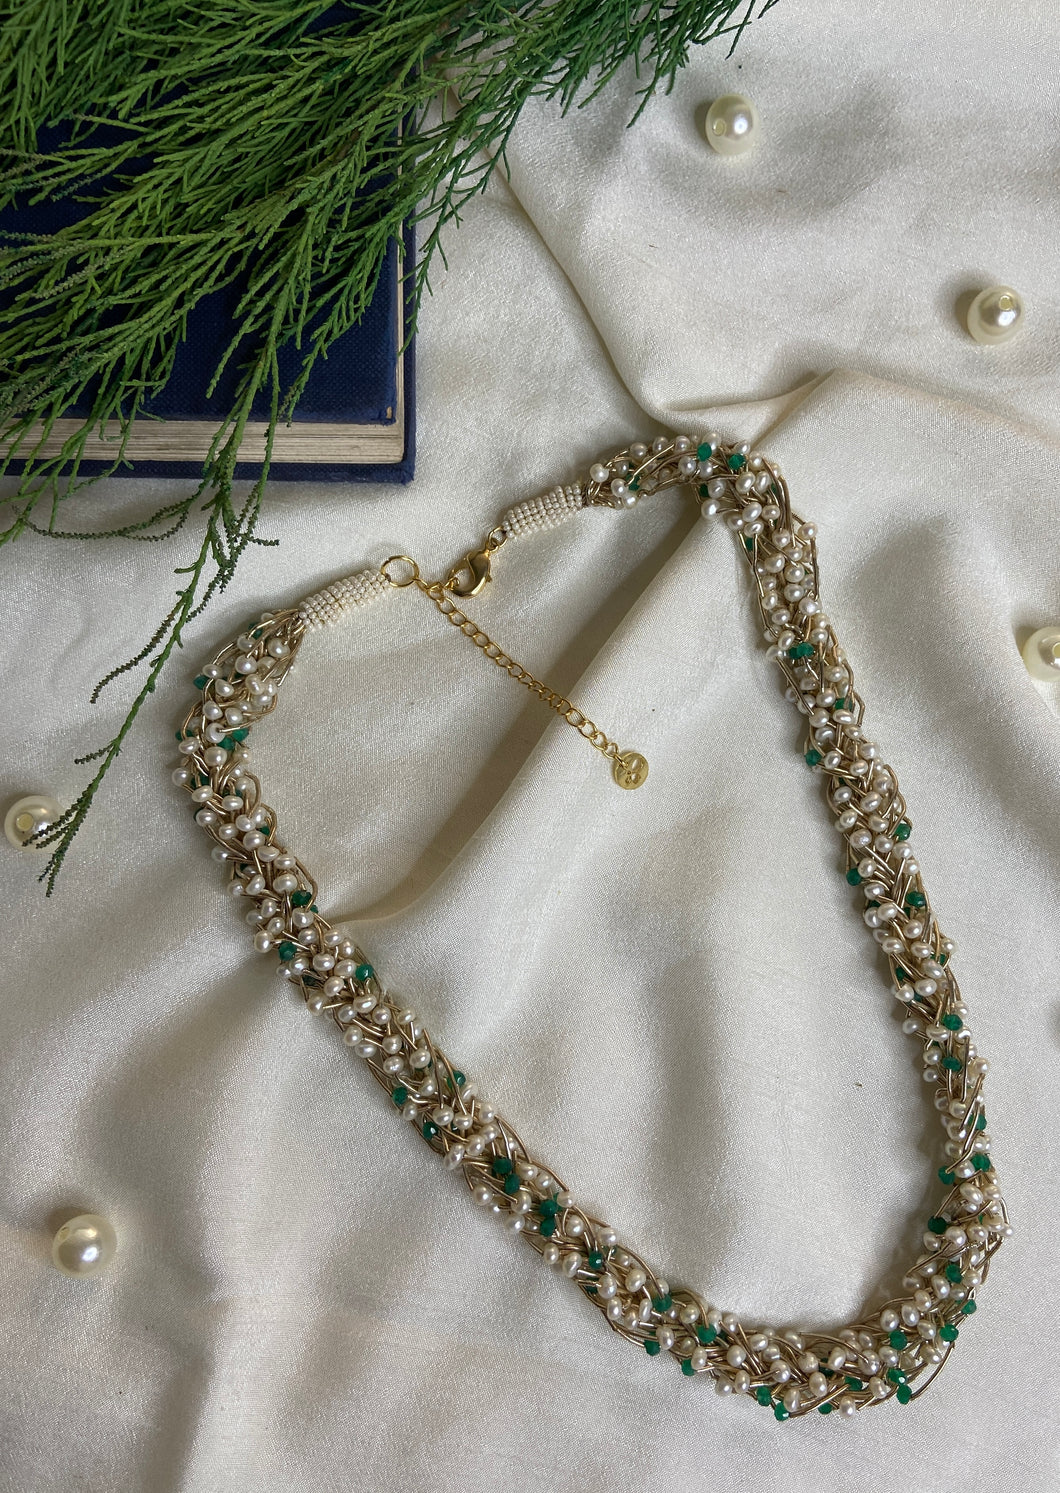 Inaya Pearl Braid necklace